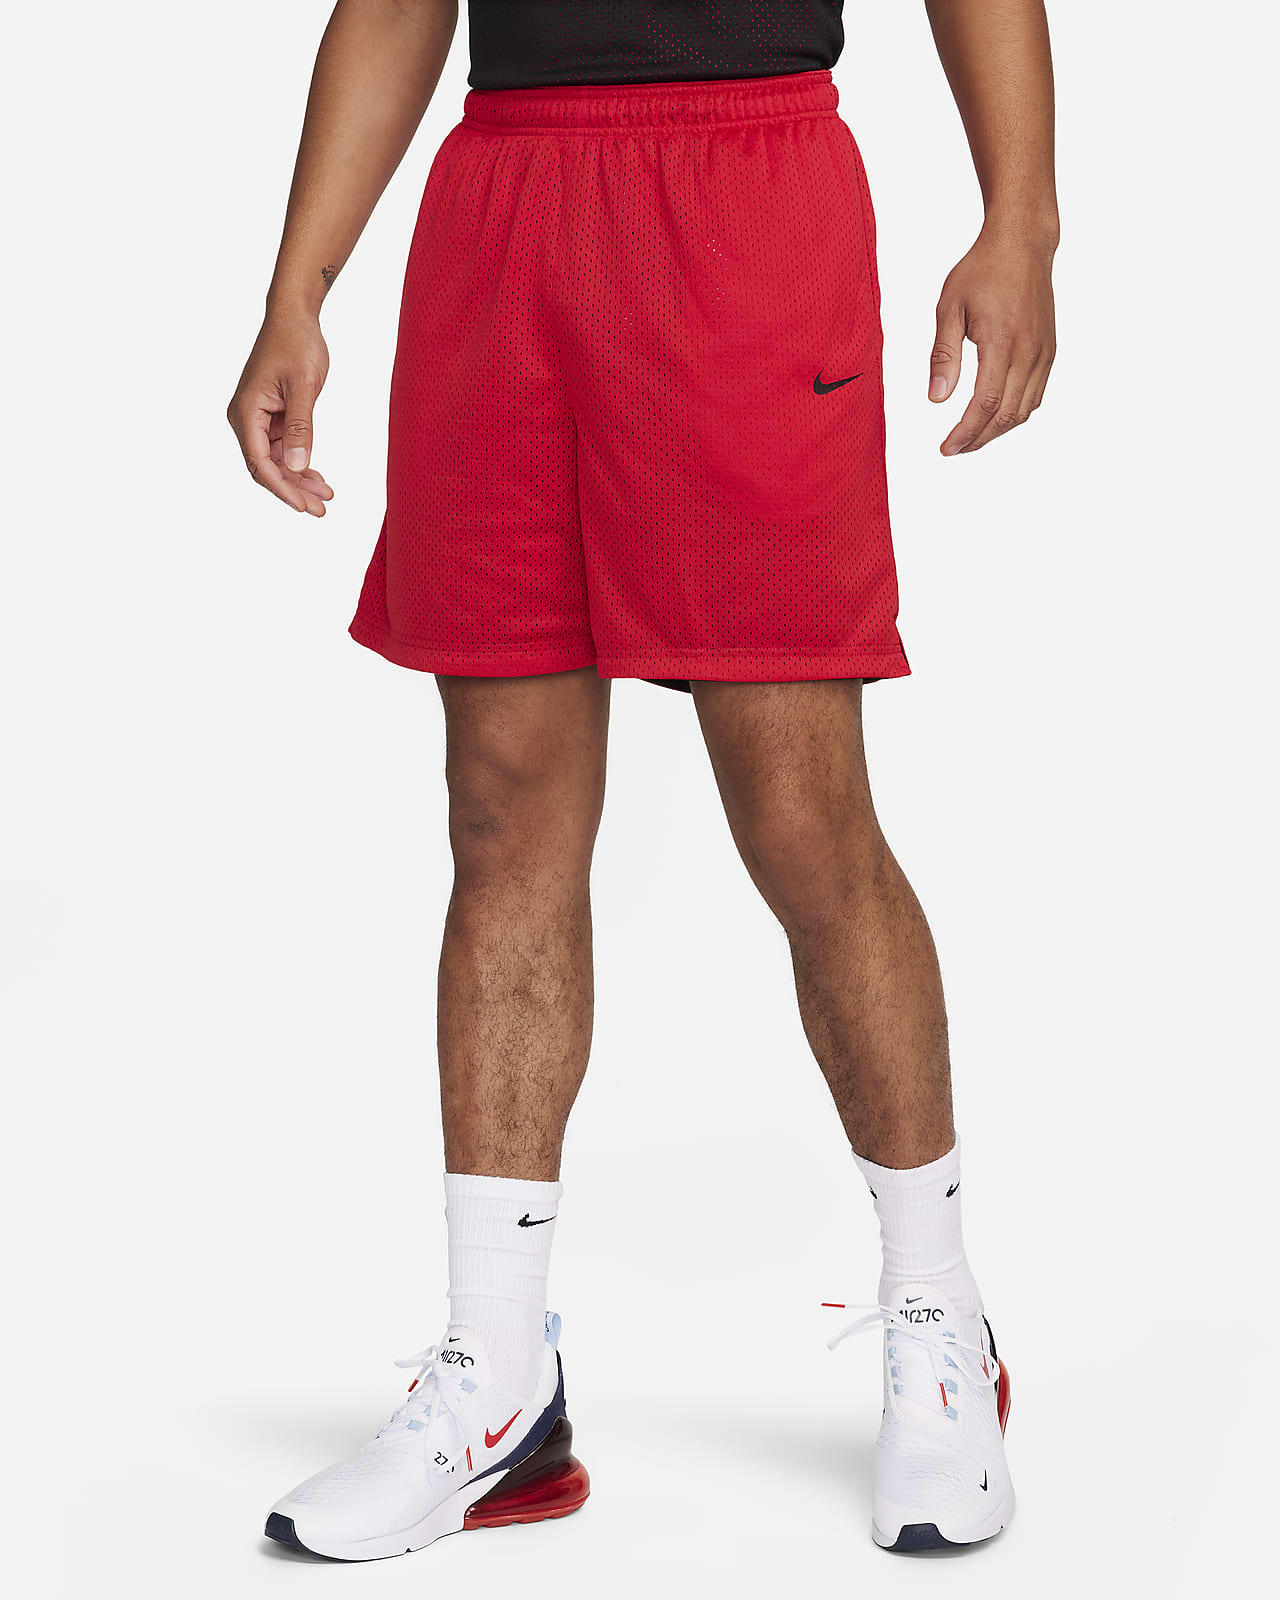 Nike Authentics Men's Practice jersey